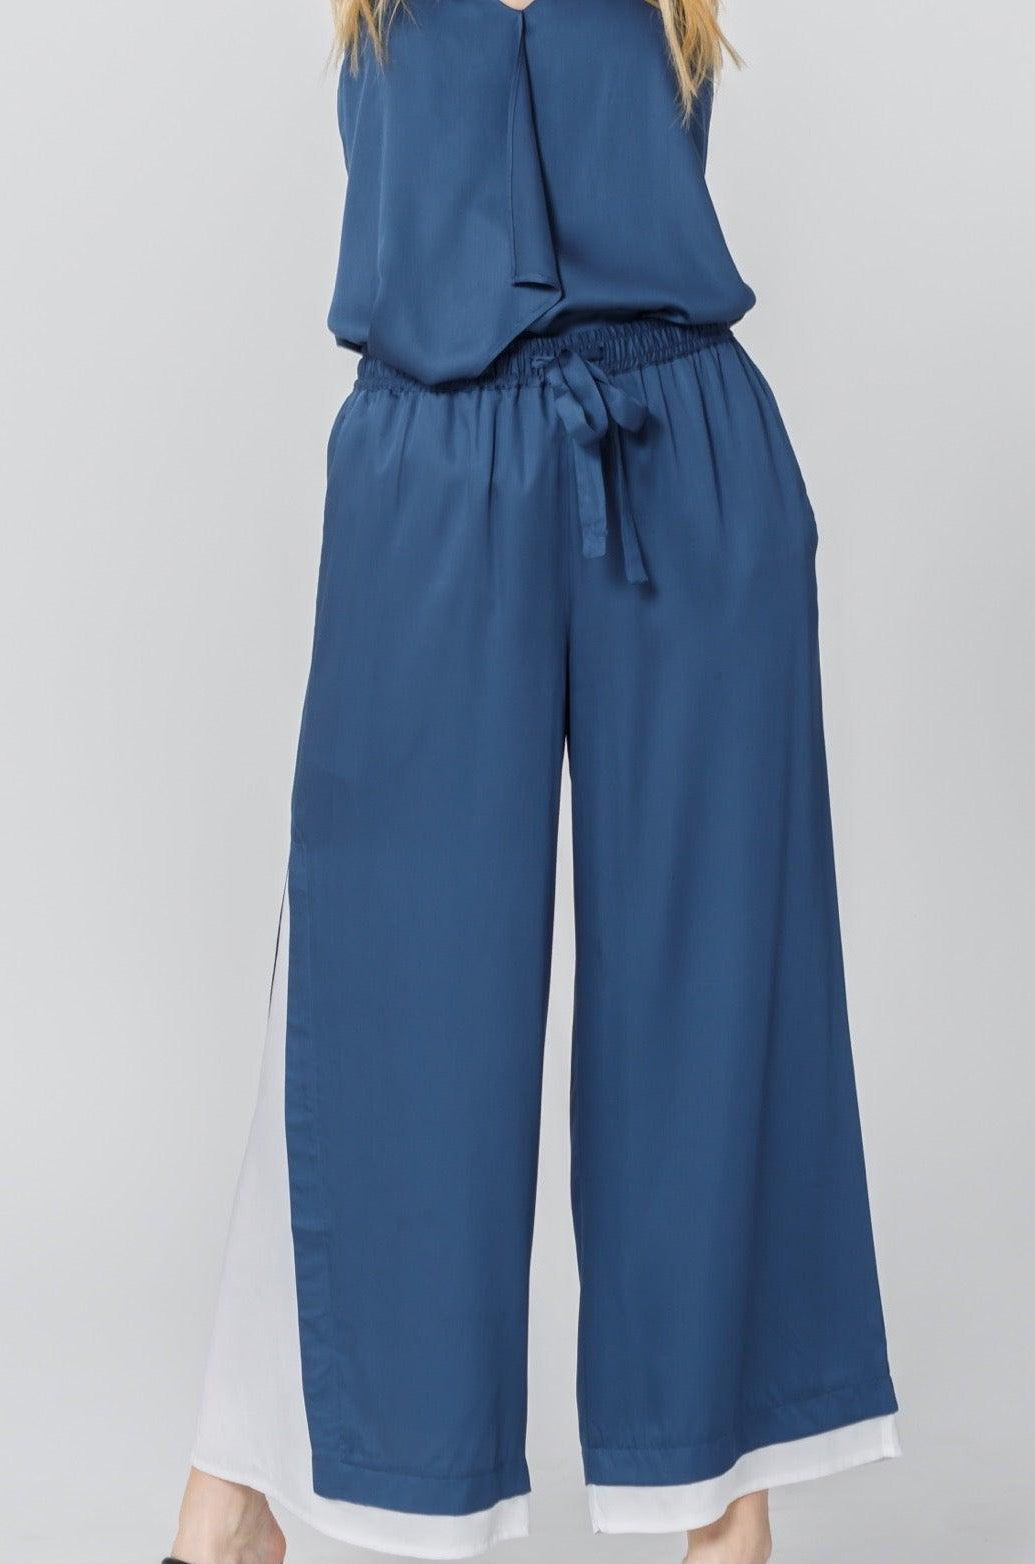 Women's Color Block Asymmetric Wide Pants - NOT LABELED